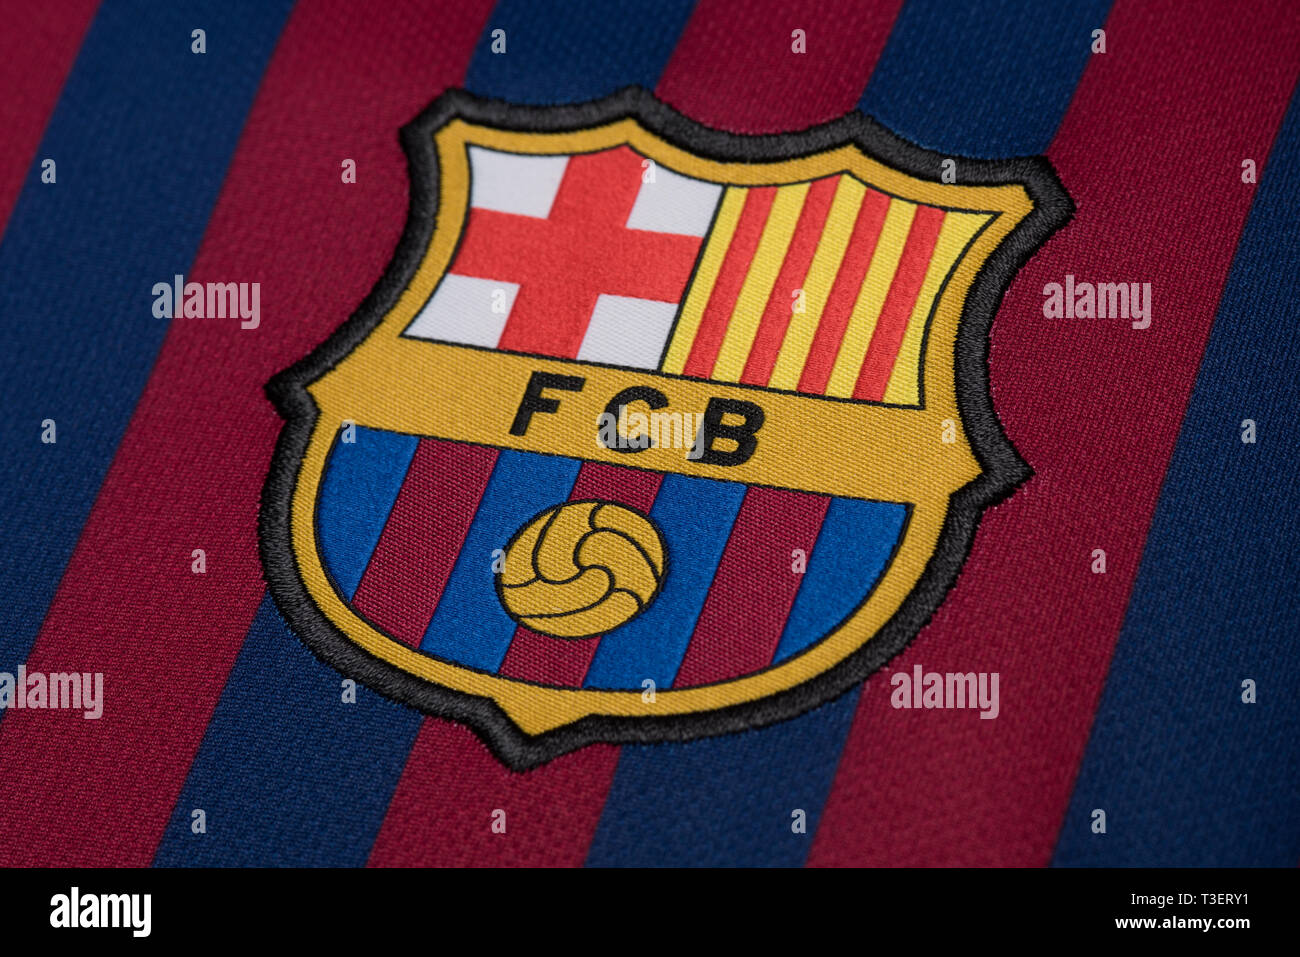 FC Barcelona jersey Stock Photo 